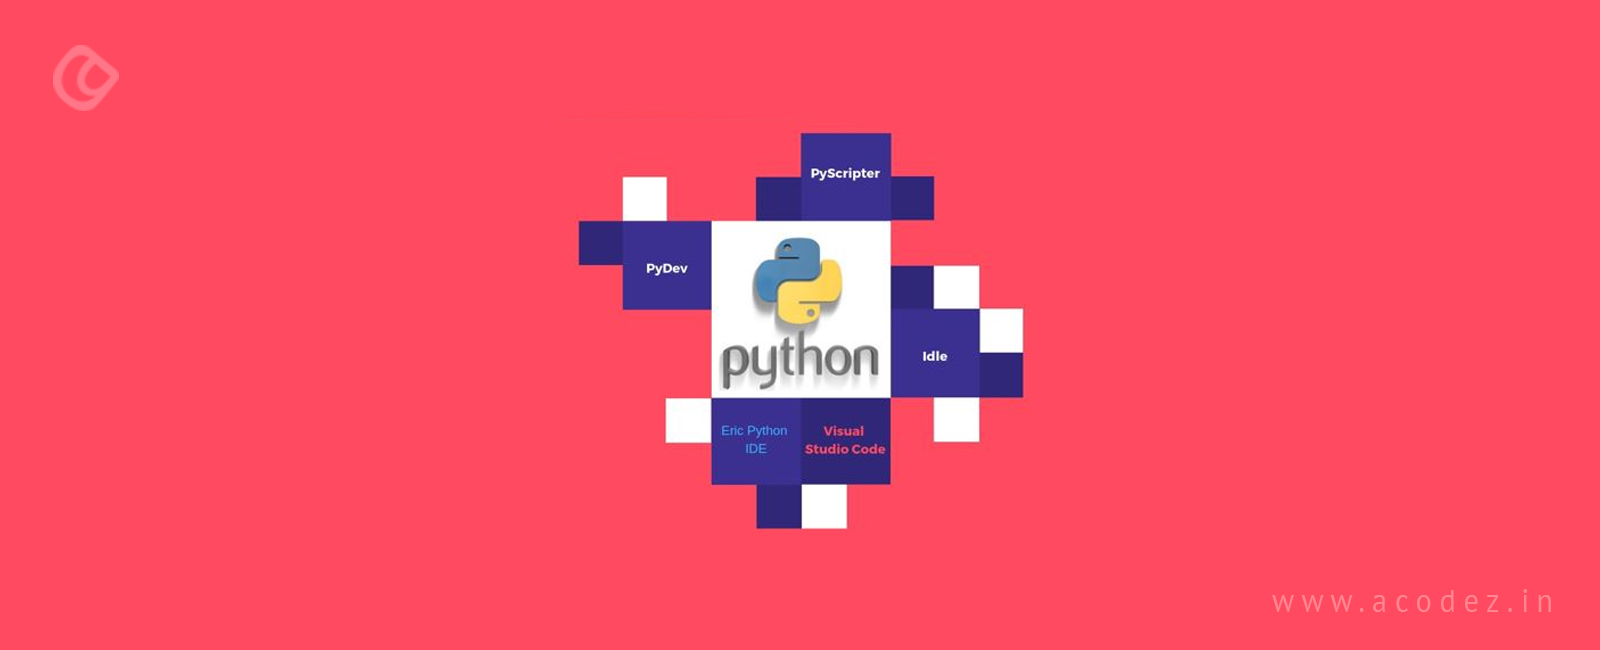 Best Python Ide Code Editors For Developers In 21